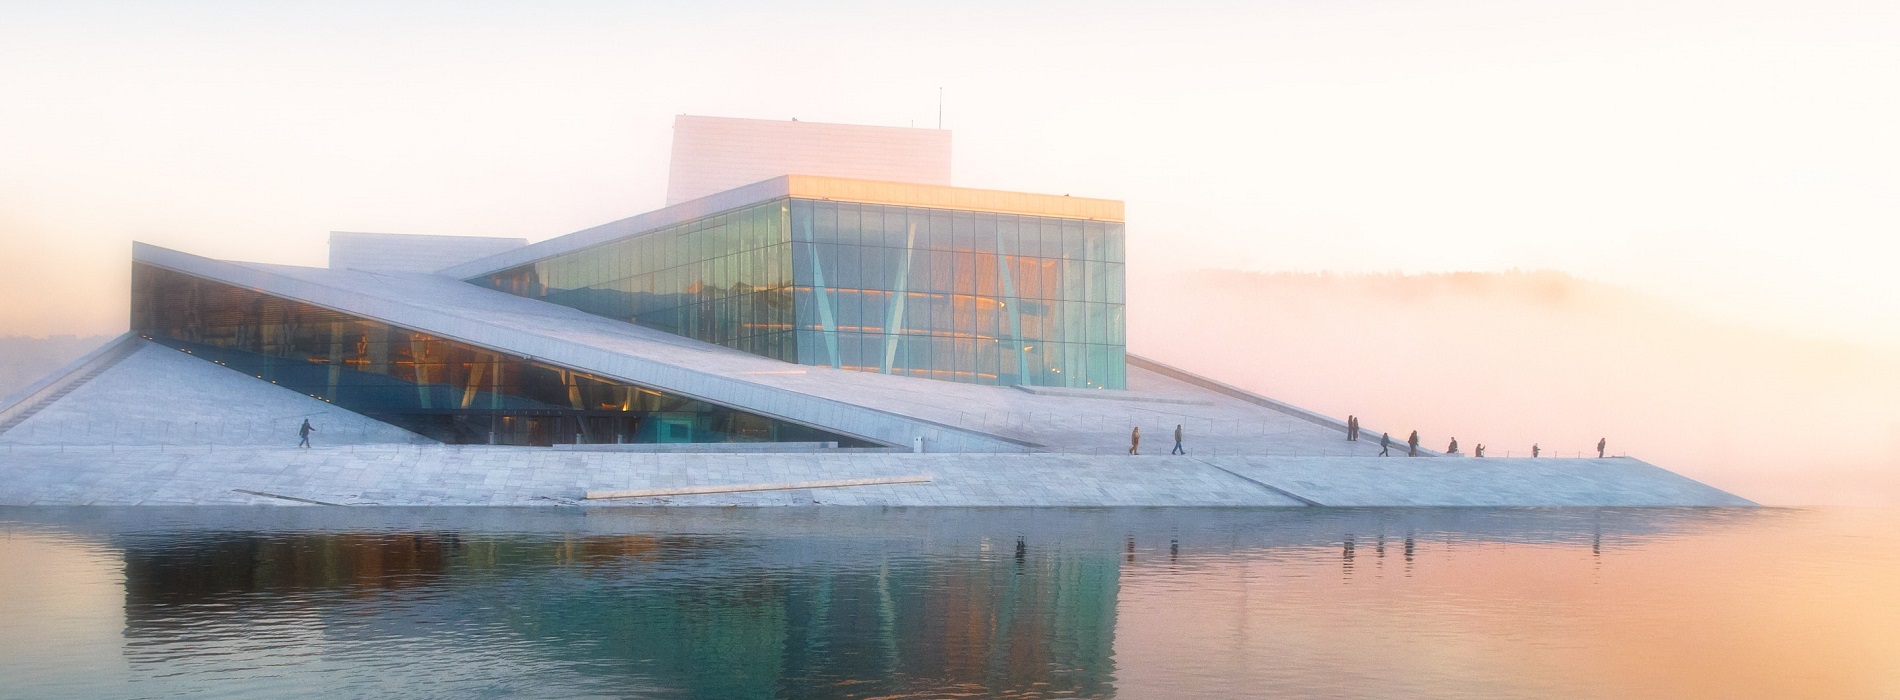 NDC Oslo 2020 header image